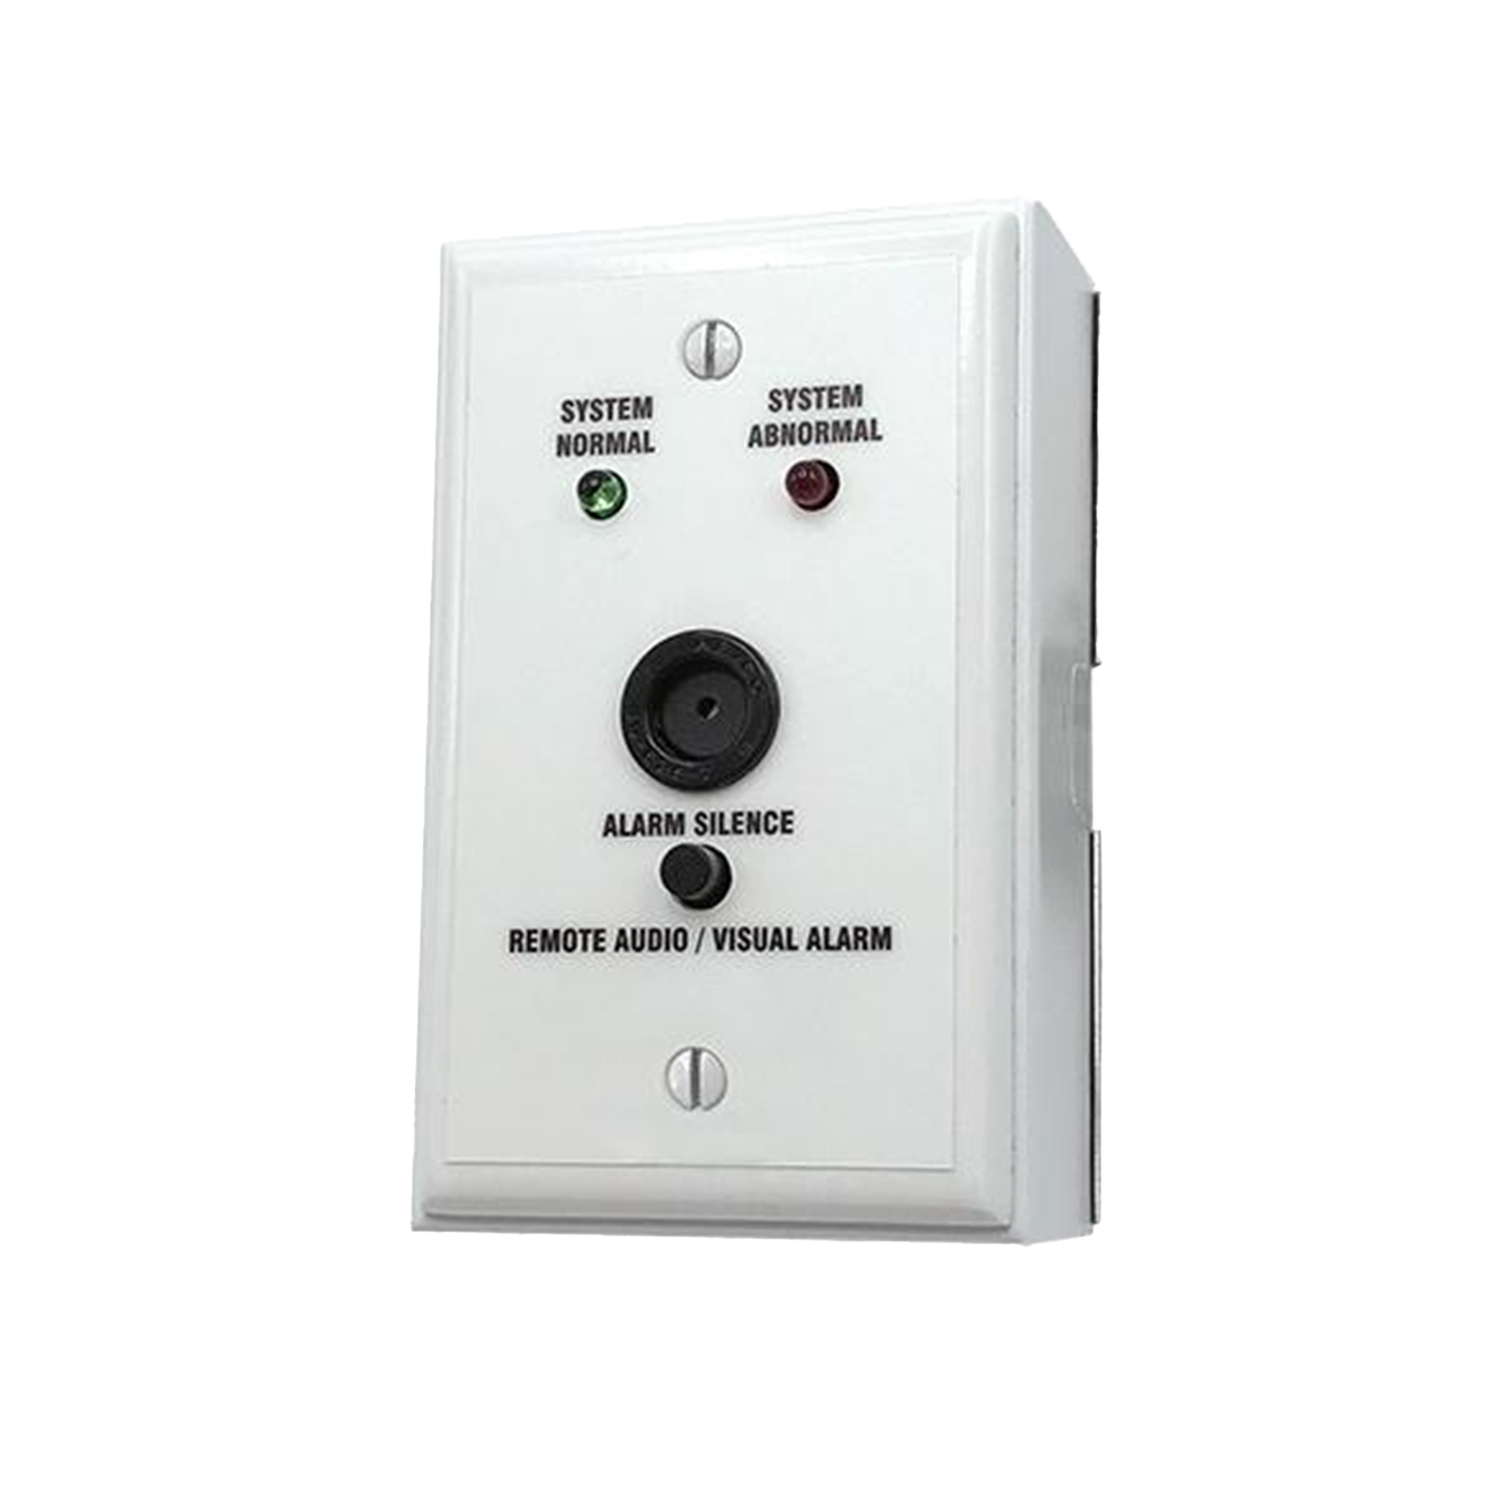 MG0098 Remote Audio/Visual Alarm